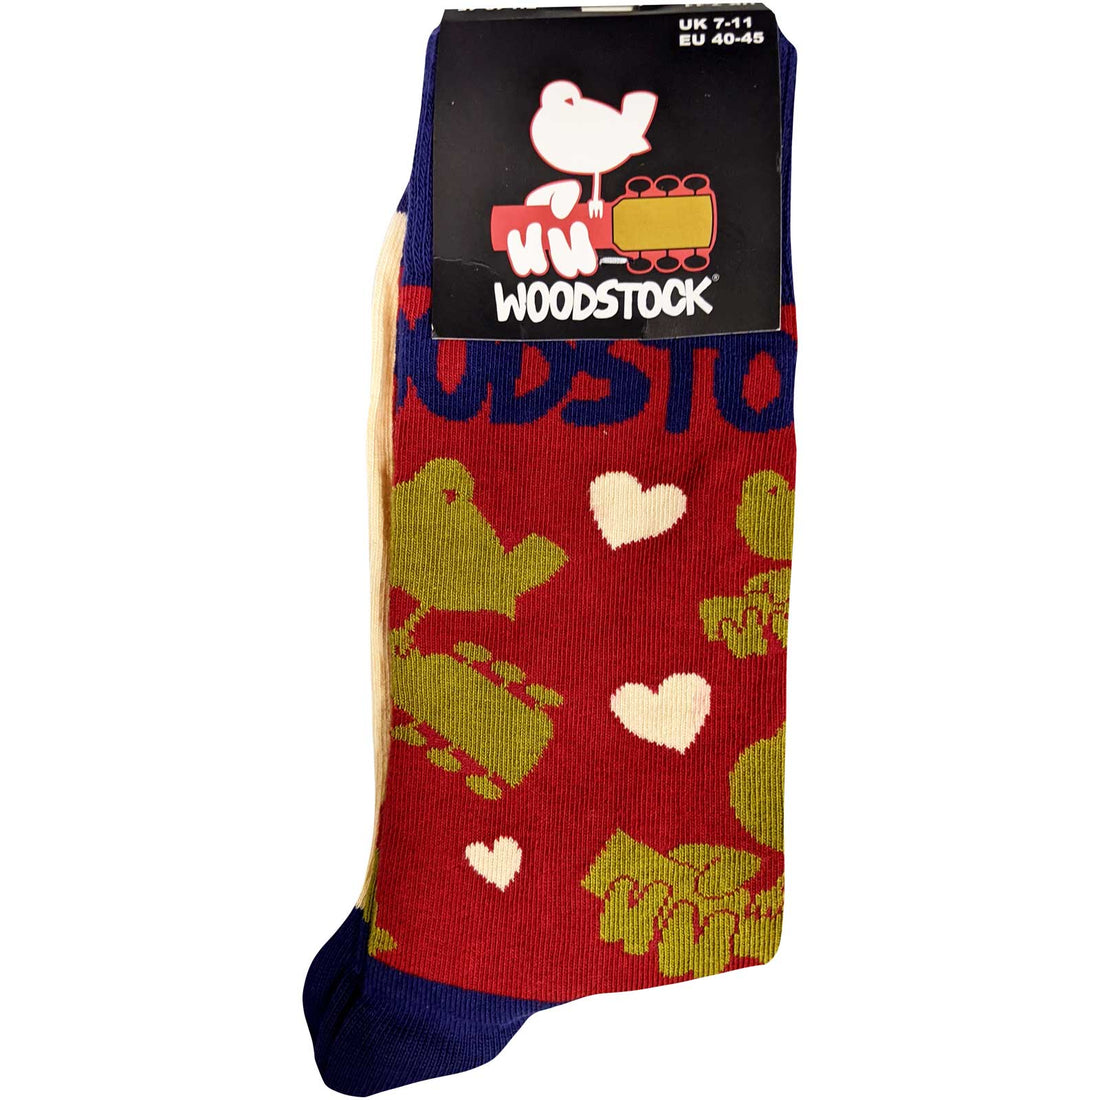 Woodstock Unisex Ankle Socks: Birds & Hearts (UK Size 7 - 11)